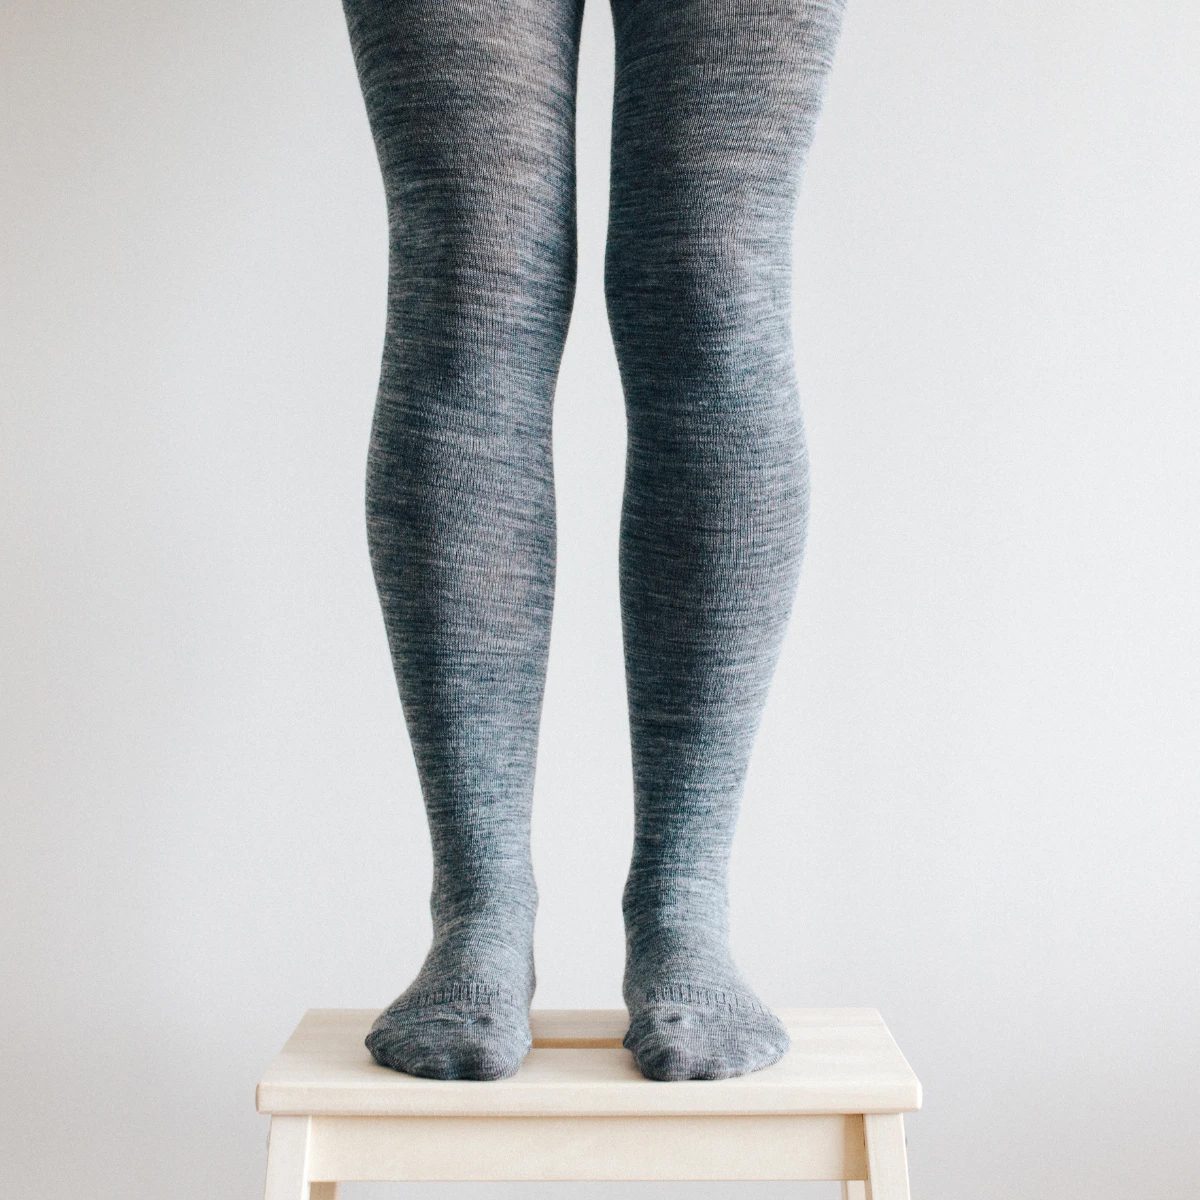 ahmed elkorashy add wool tights with feet photo